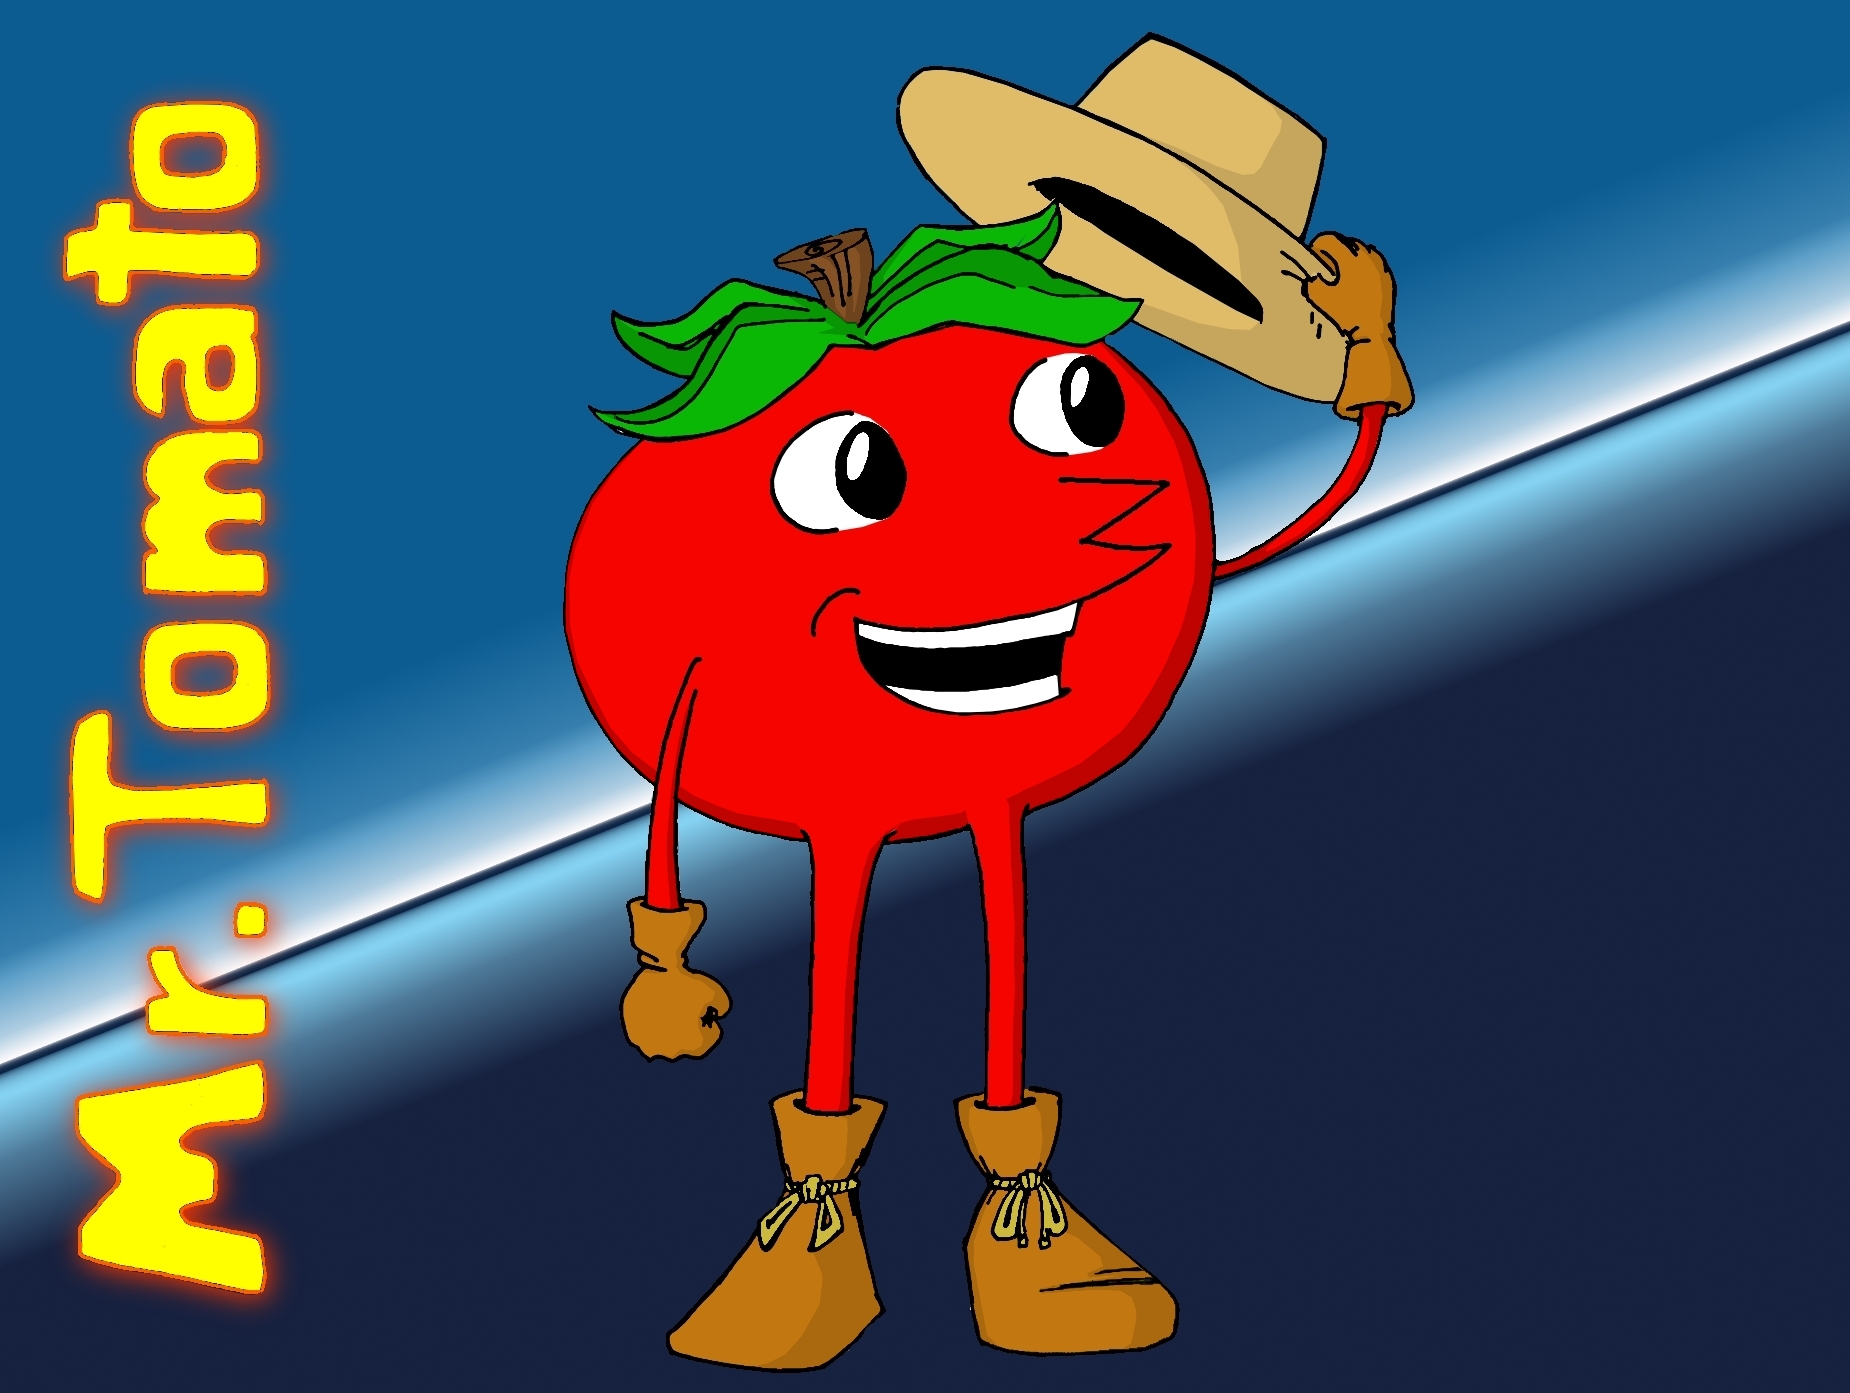 Mr Tomato by Shipahn on DeviantArt